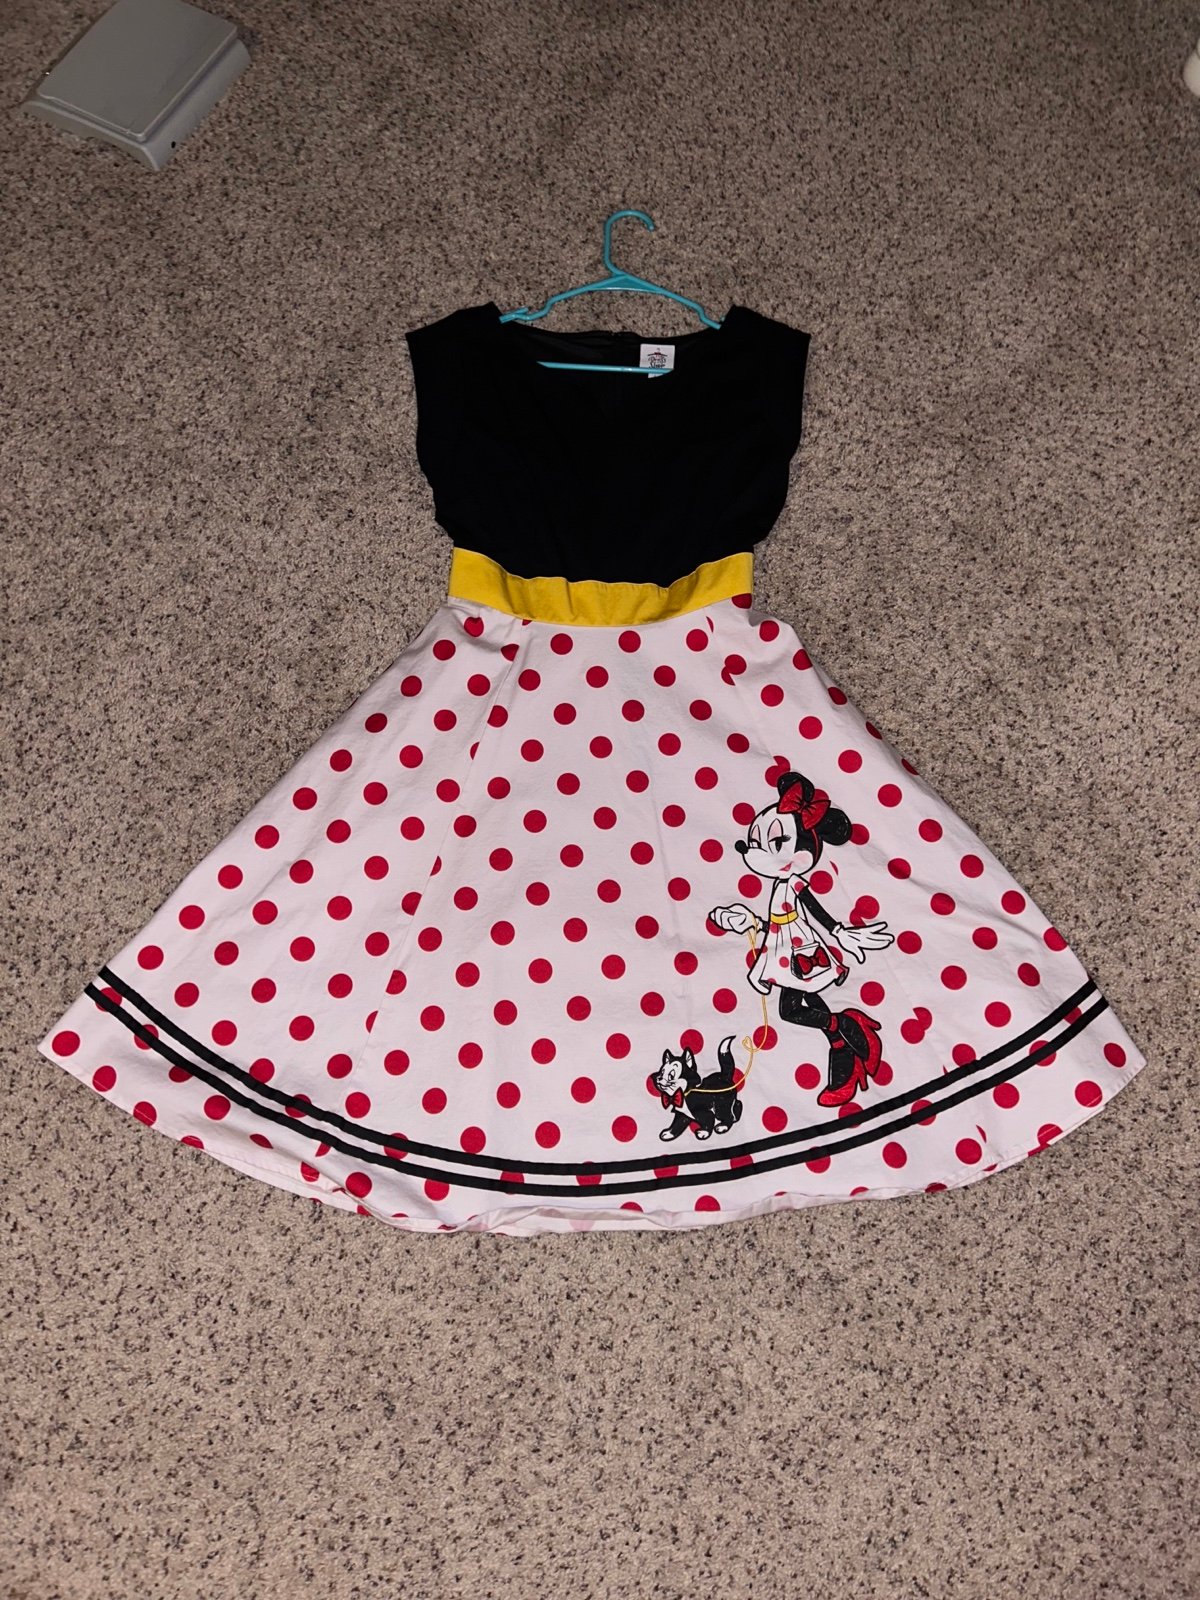 Authentic Disney Dress Shop Minnie Mouse Polkadot Vintage Dress (Large) lJu1NQZ0Z High Quaity